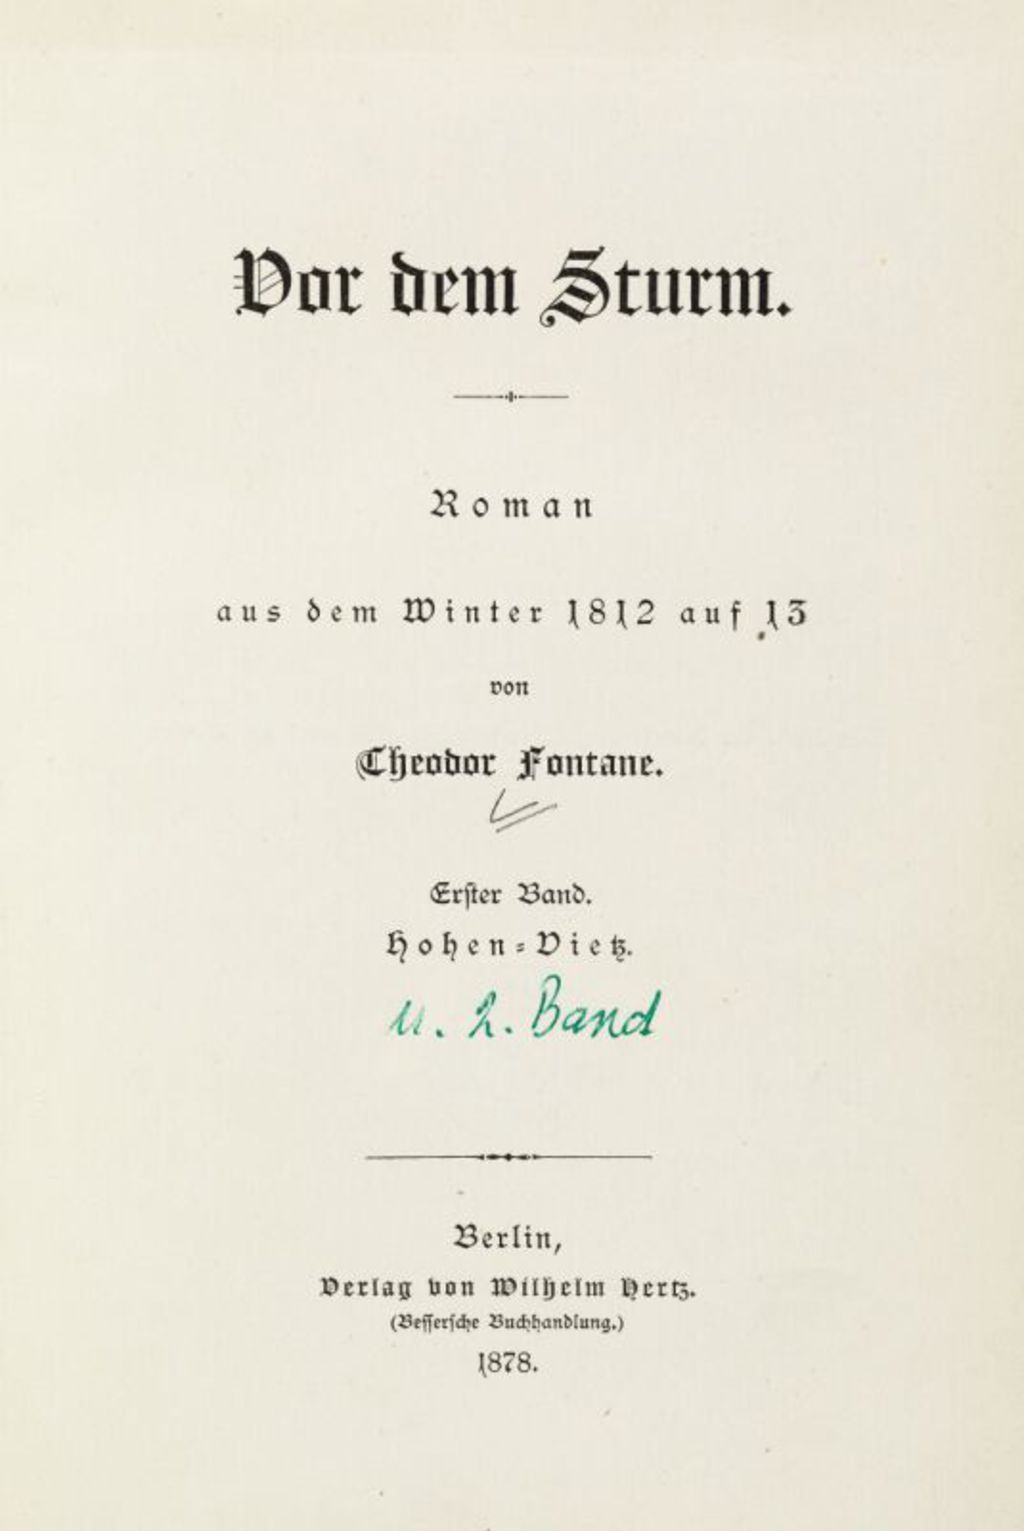 Buch: Fontane, Theodor "Vor dem Sturm", 1878